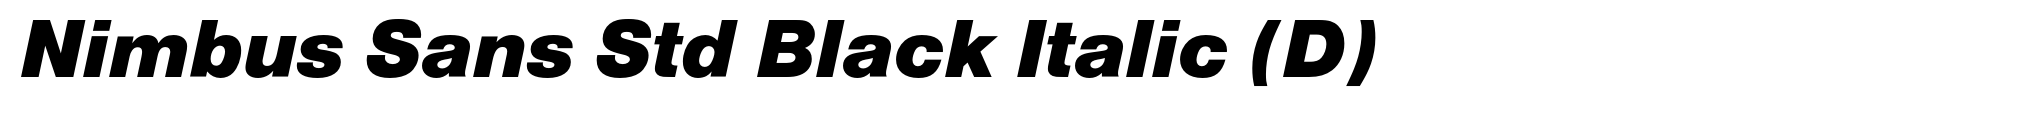 Nimbus Sans Std Black Italic (D) image